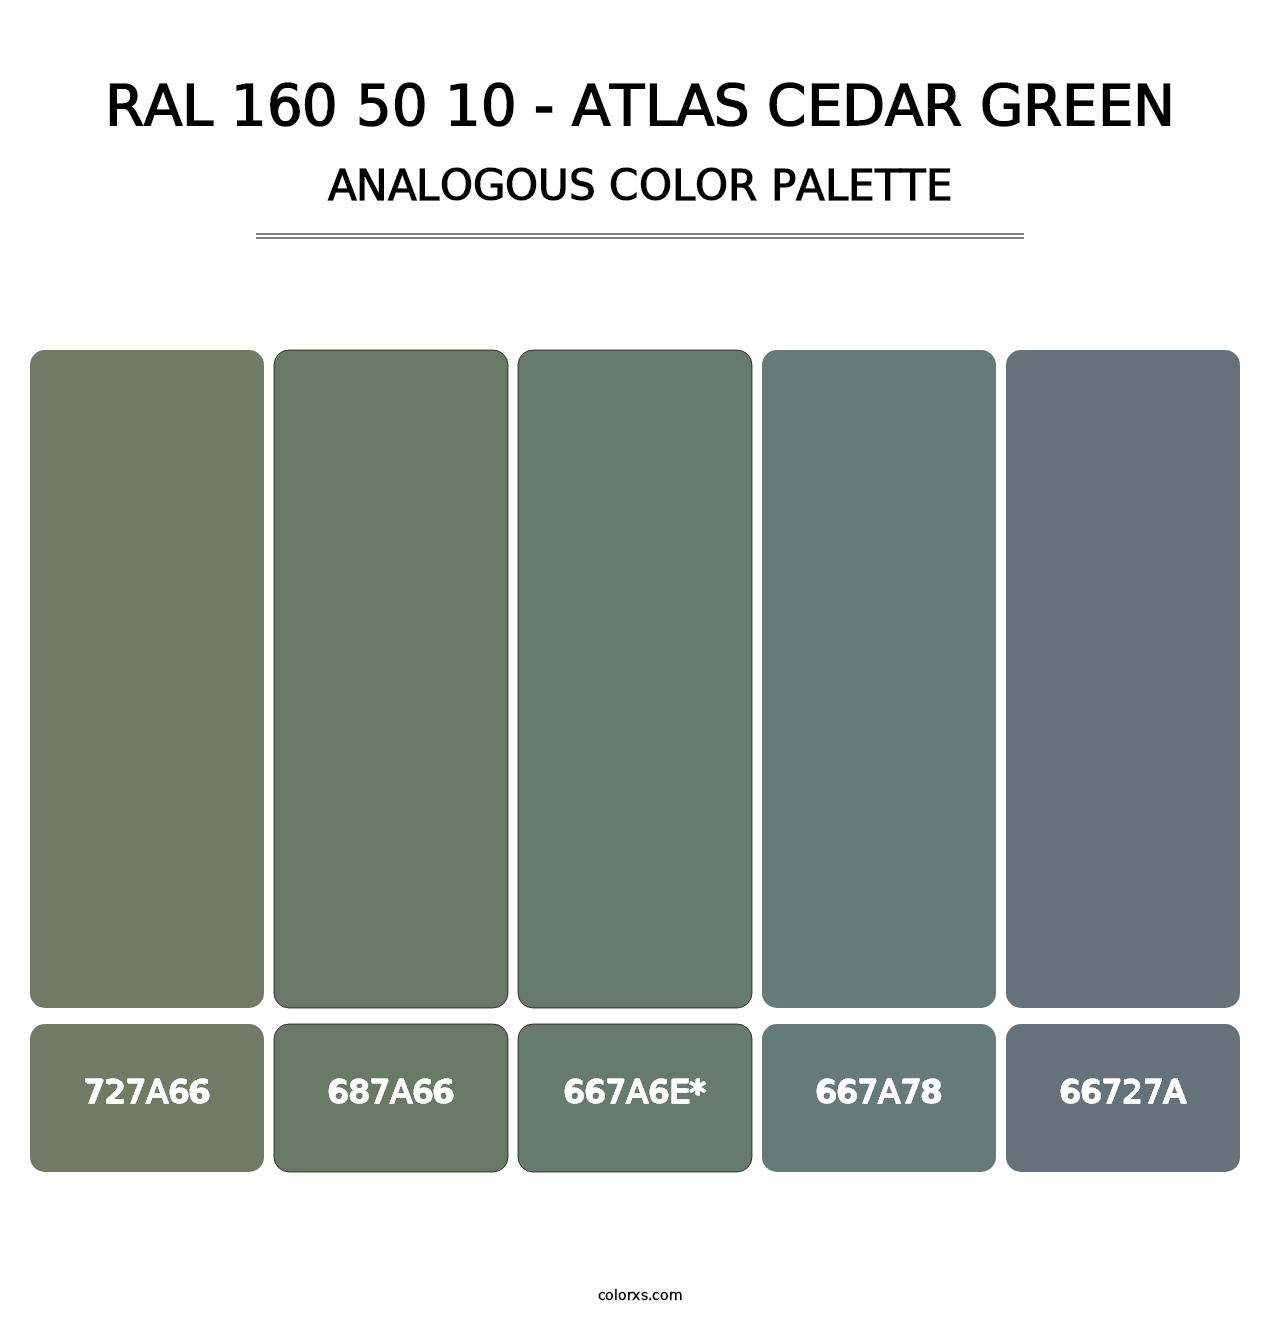 RAL 160 50 10 - Atlas Cedar Green - Analogous Color Palette